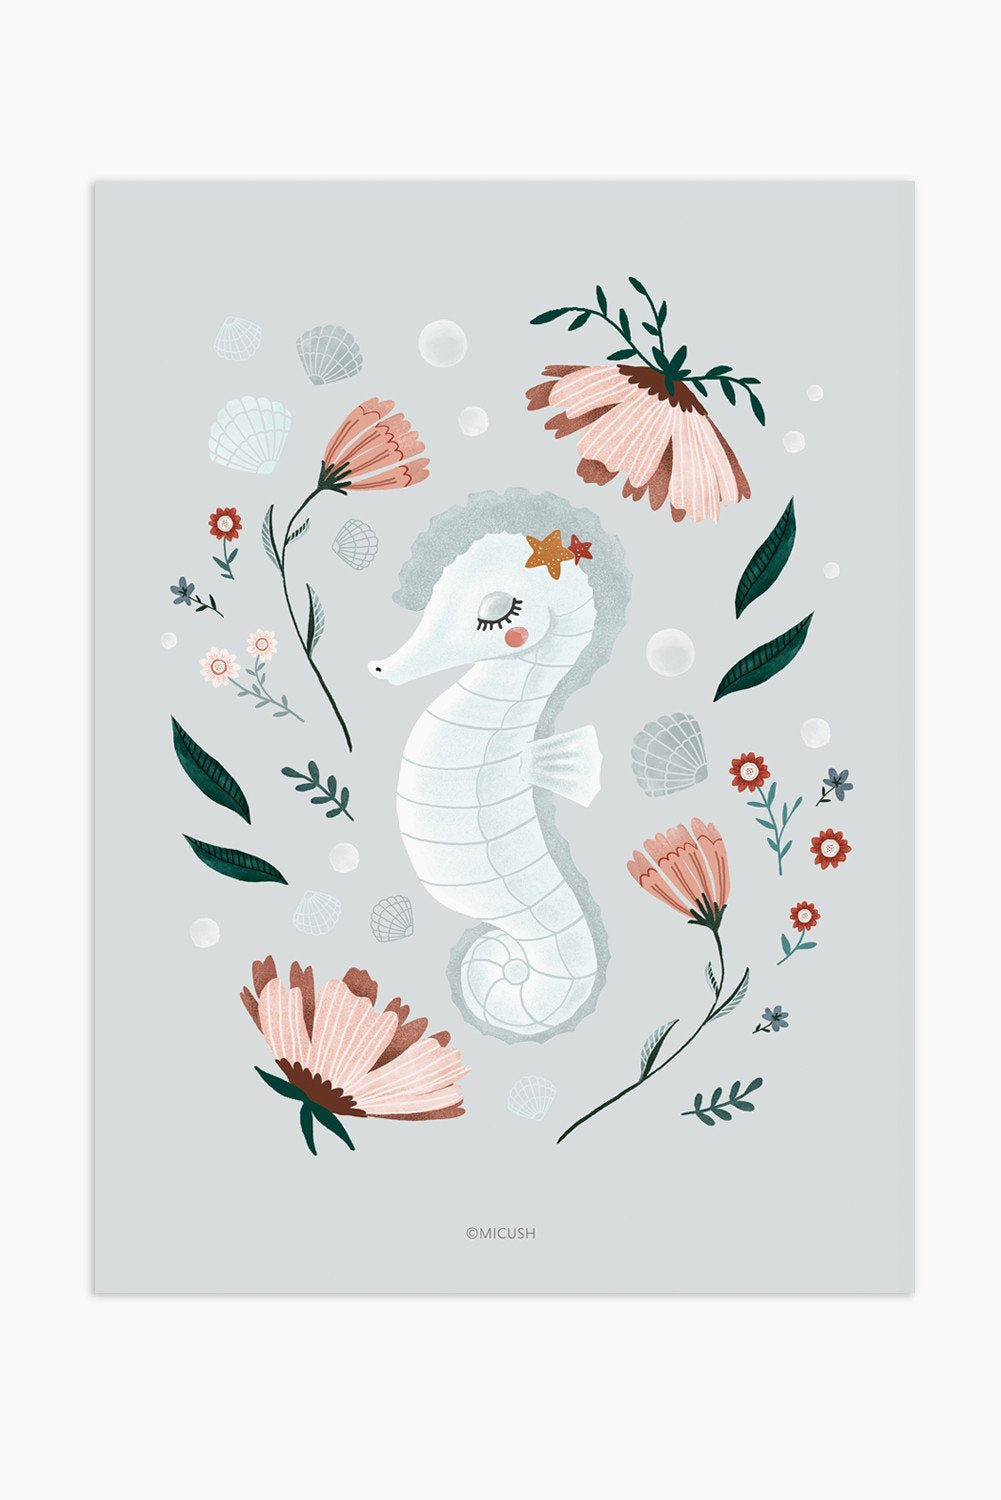 Art Print - Seahorse